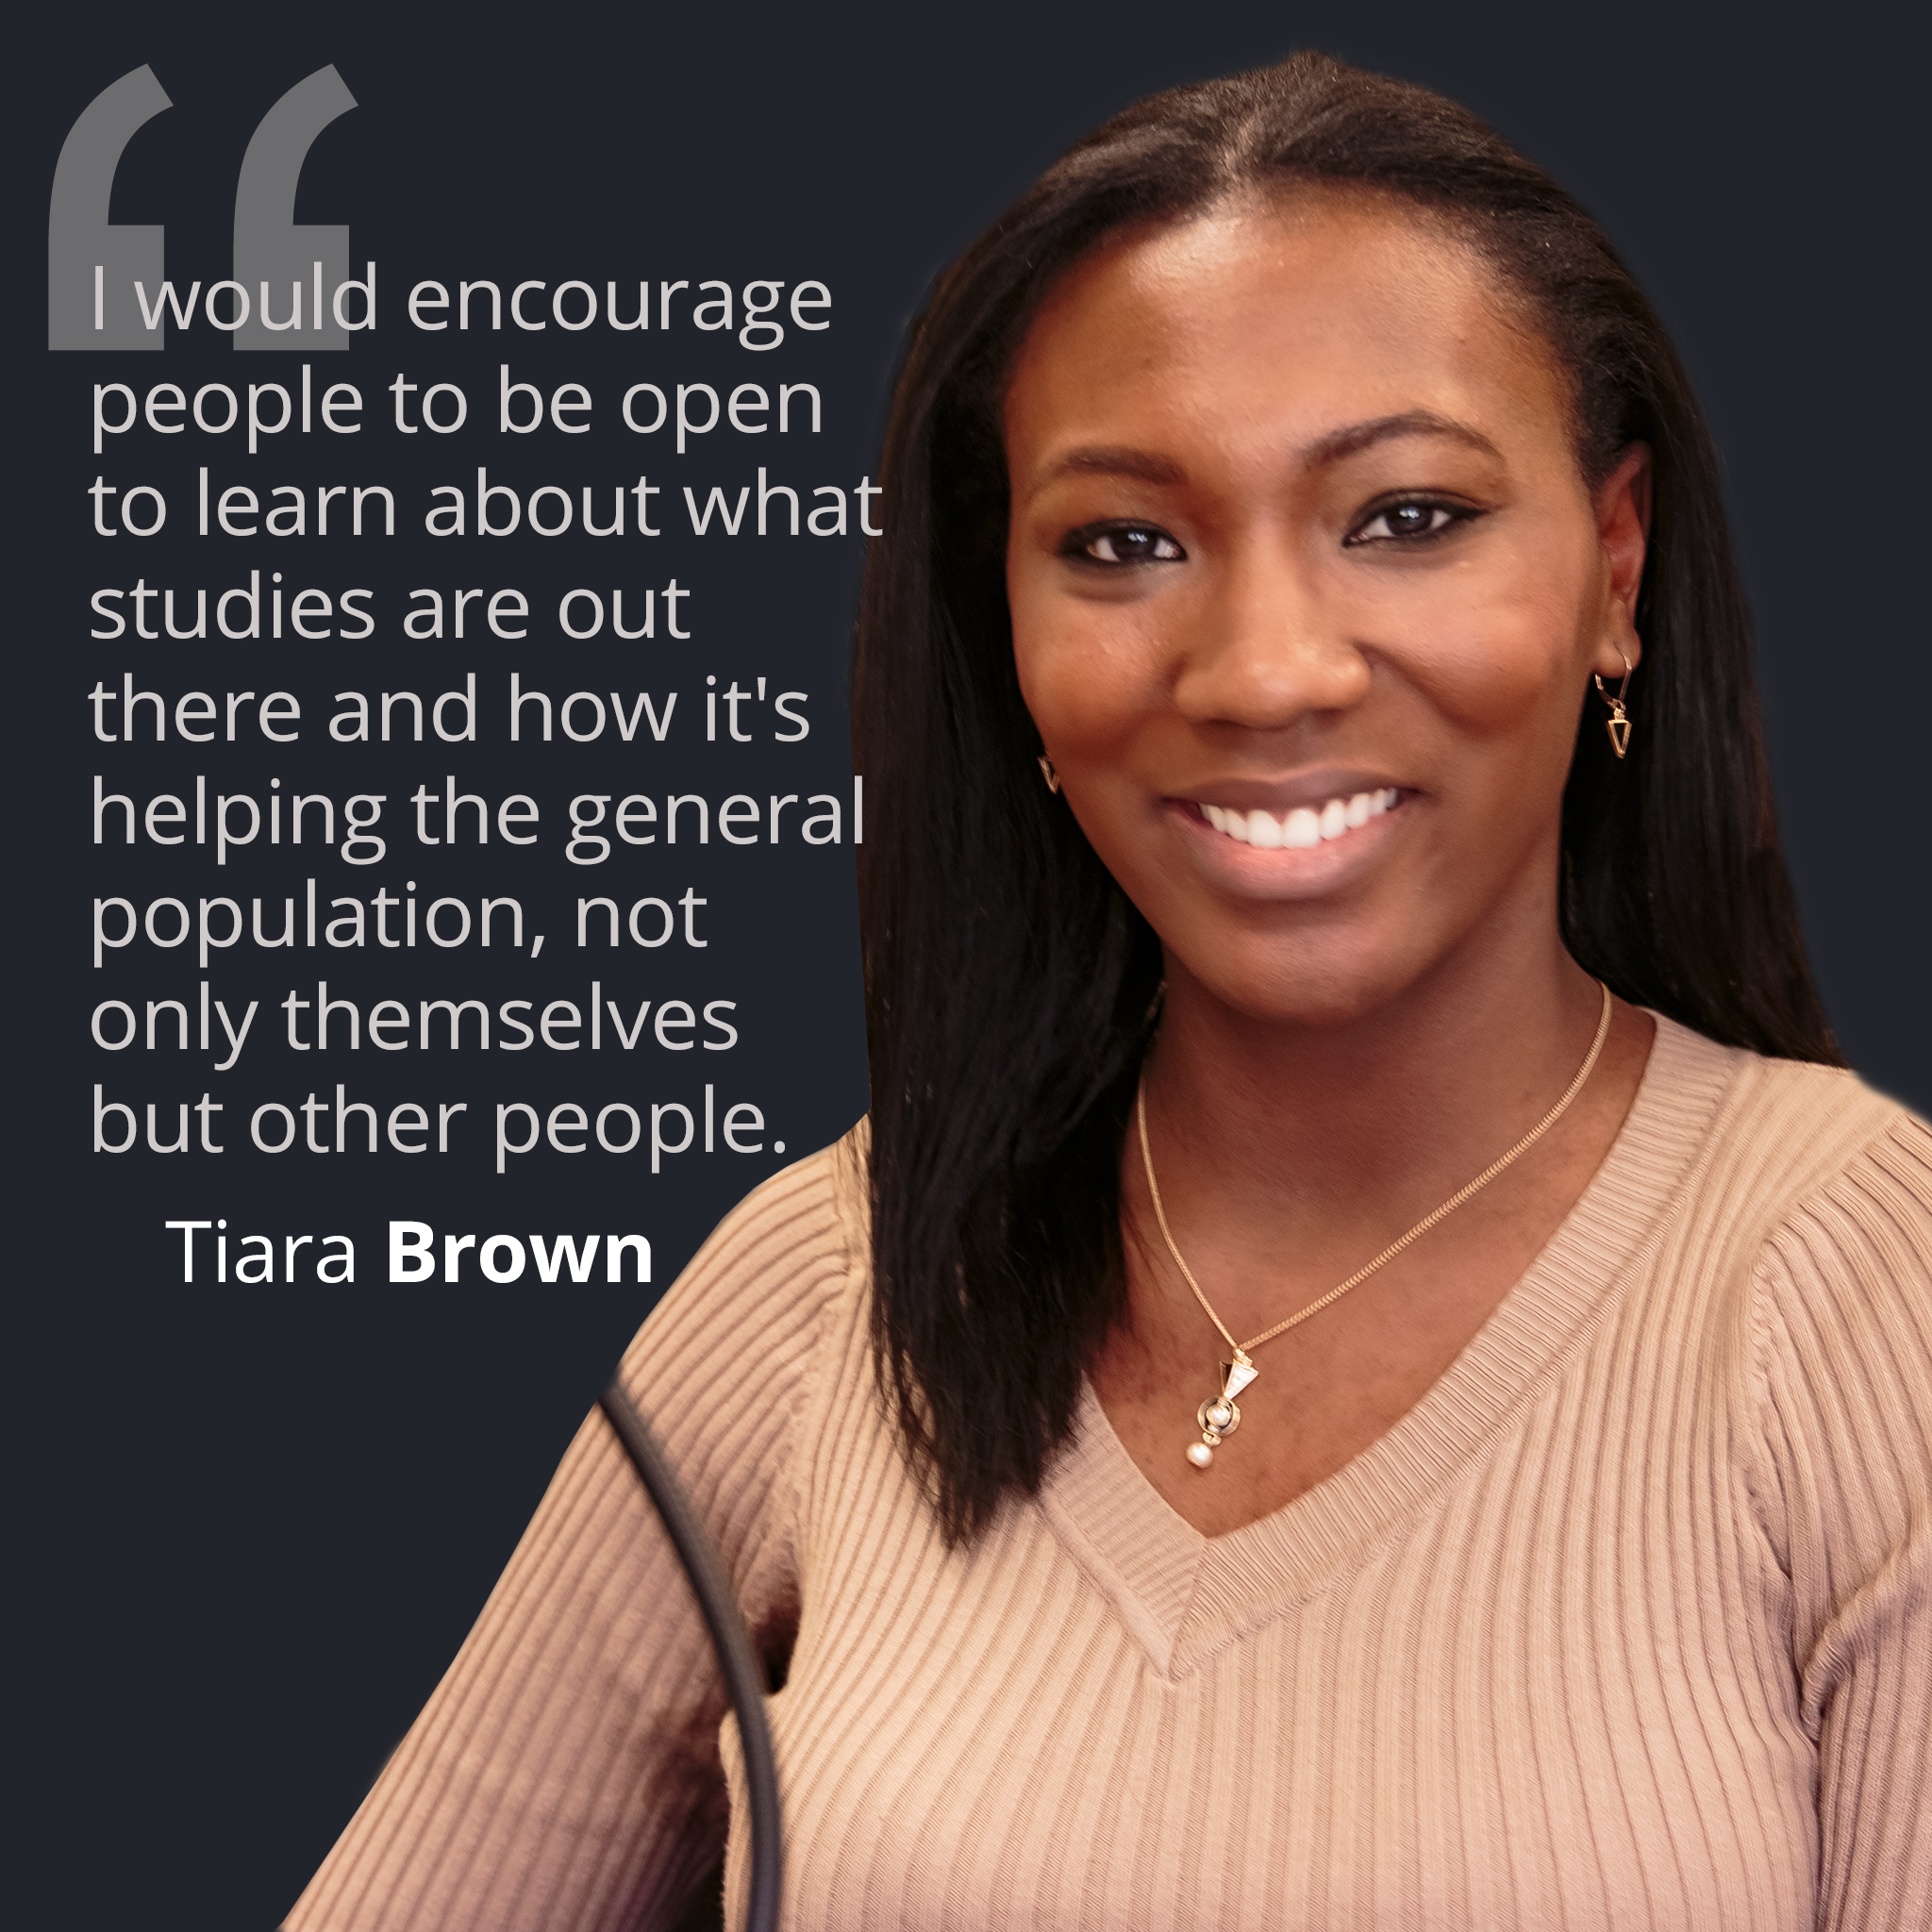 Tiara Brown quote and headshot